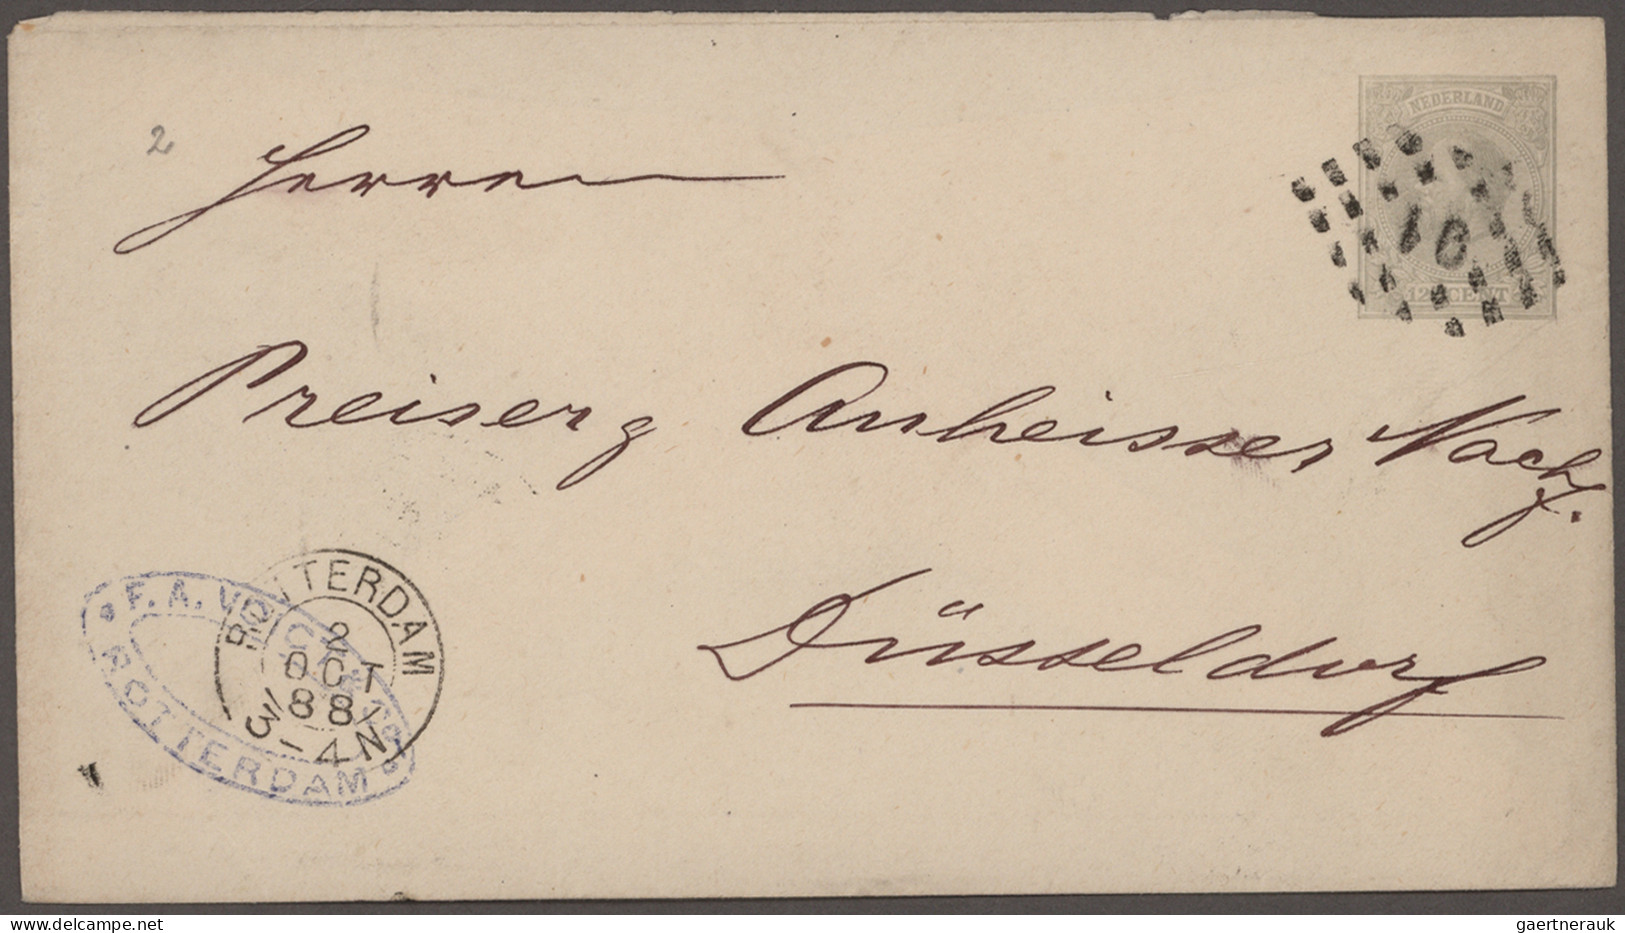 Netherlands - postal stationery: 1873/1964 (ca.), assortment of apprx. 66 used/u